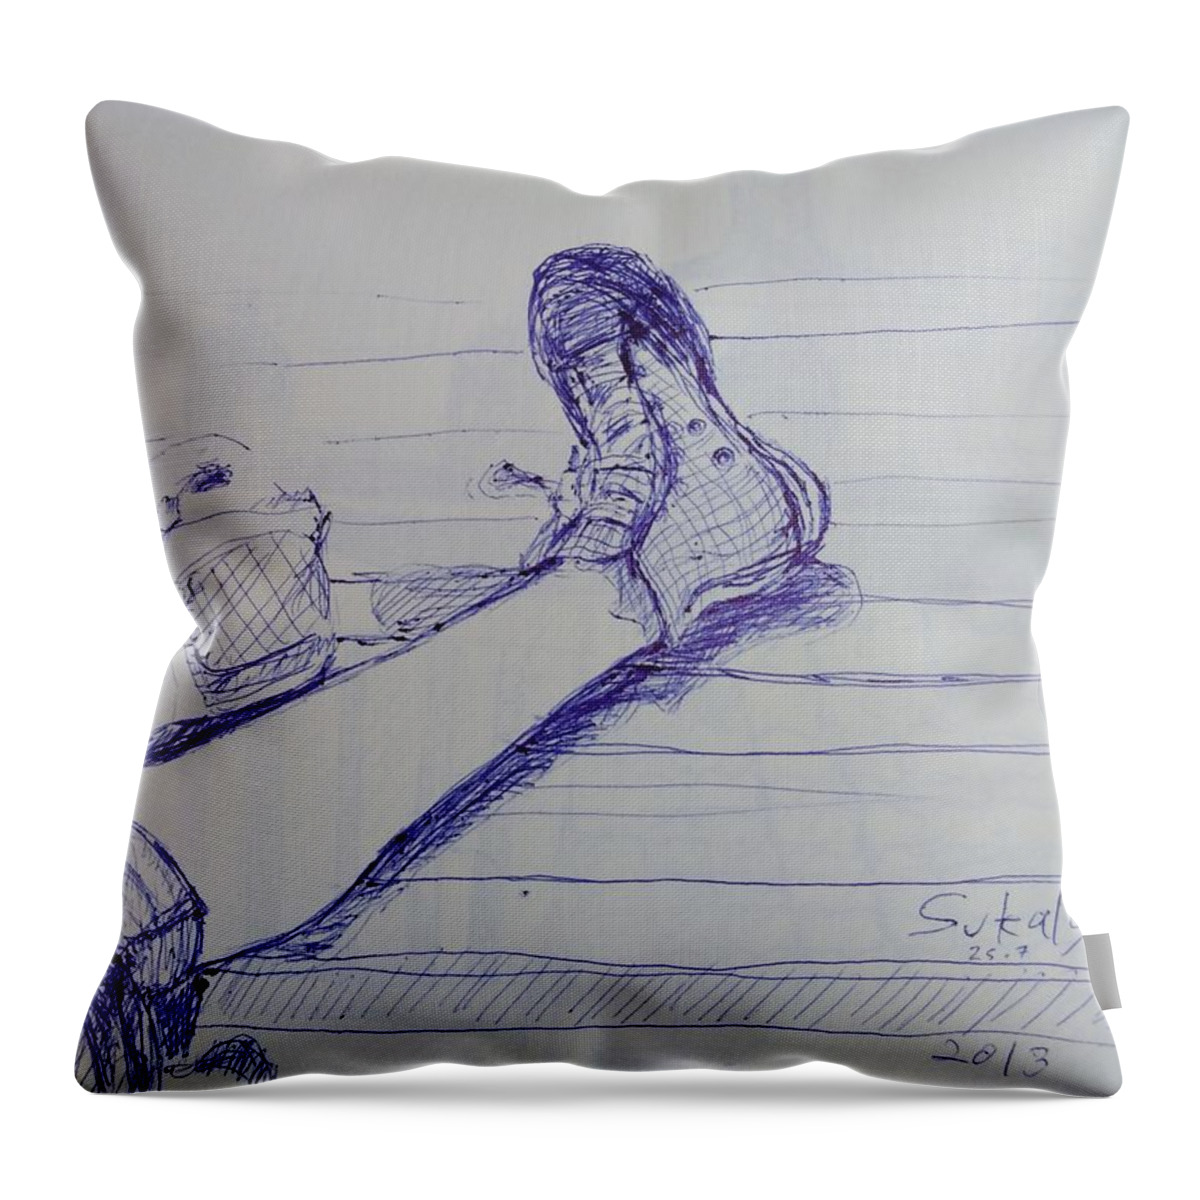 Leg Throw Pillow featuring the drawing Sketching a leg by Sukalya Chearanantana